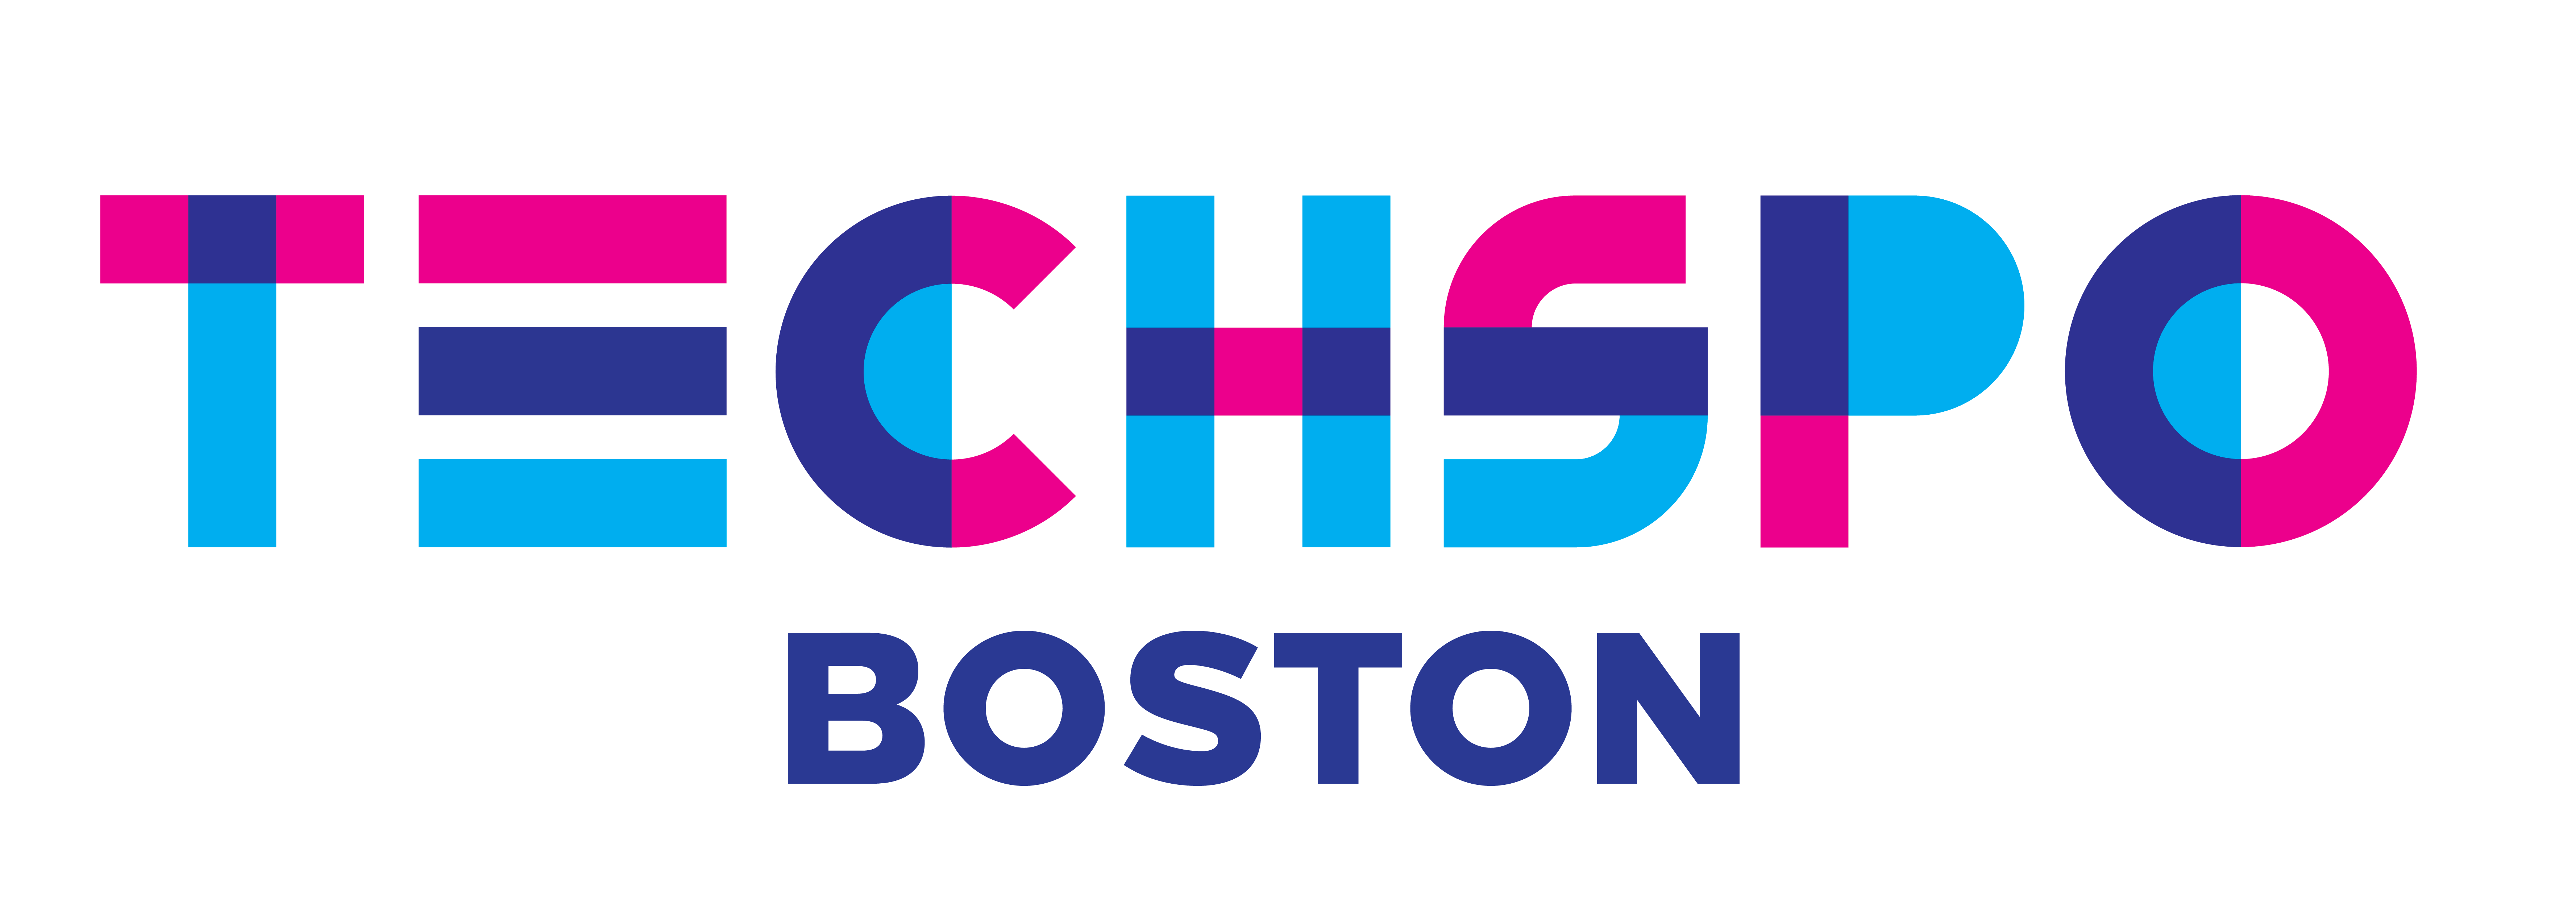 TECHSPO Boston 2022 Technology Expo (Internet ~ Mobile ~ AdTech ~ MarTech ~ SaaS), Boston, Massachusetts, United States